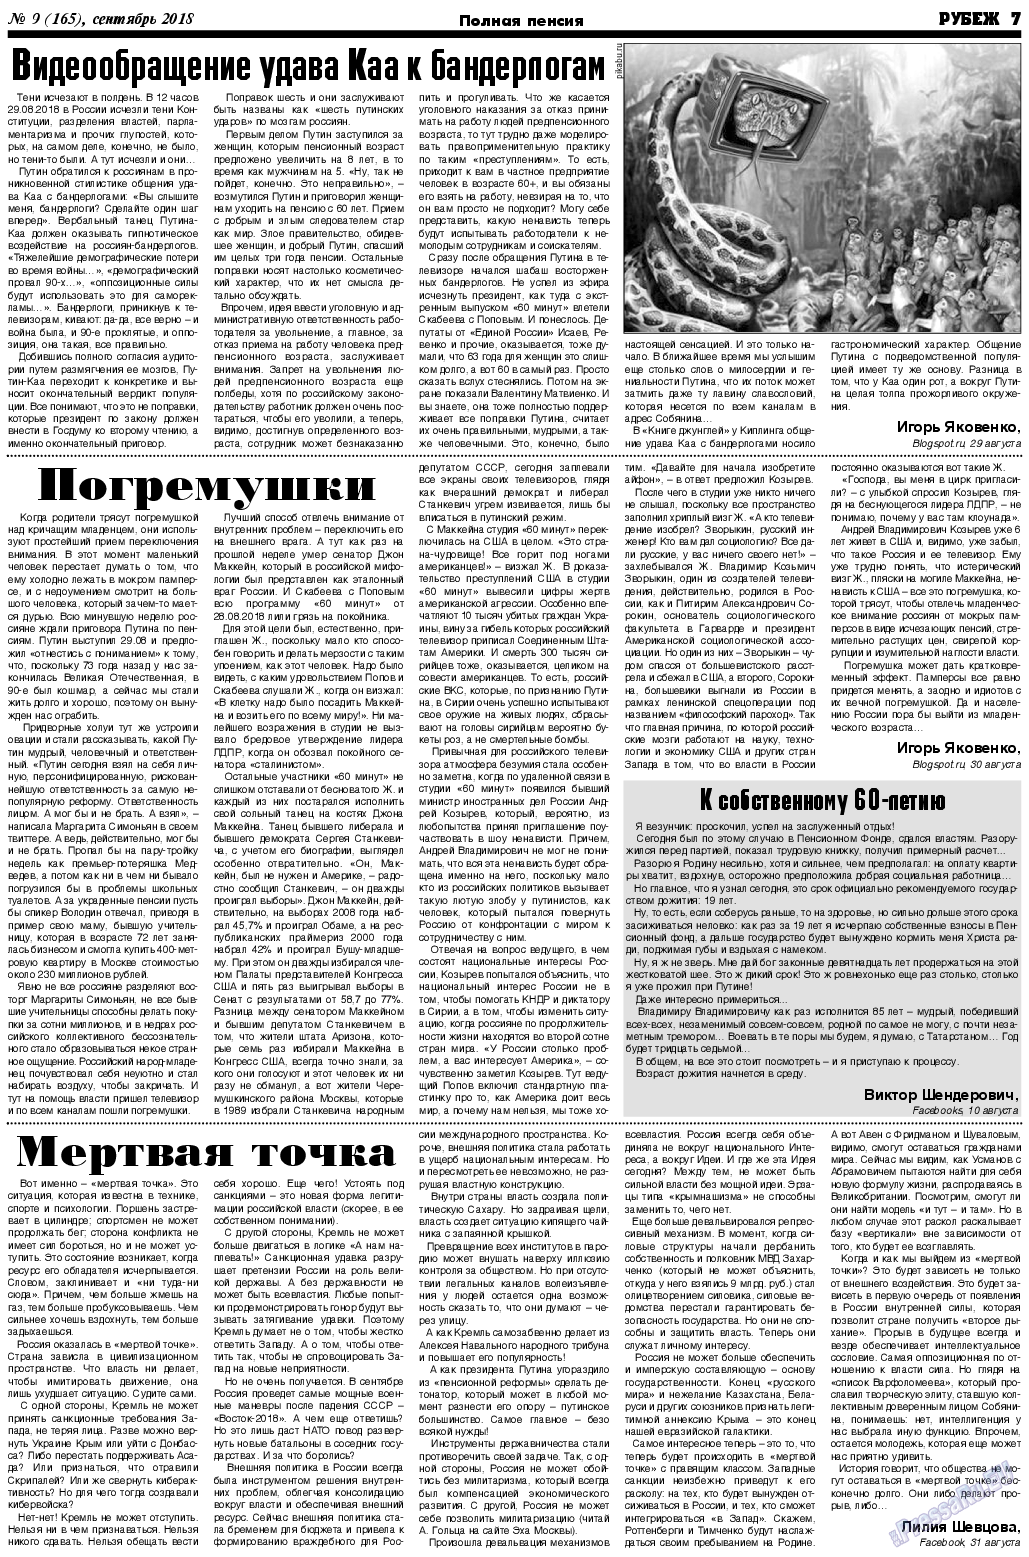 Рубеж, газета. 2018 №9 стр.7